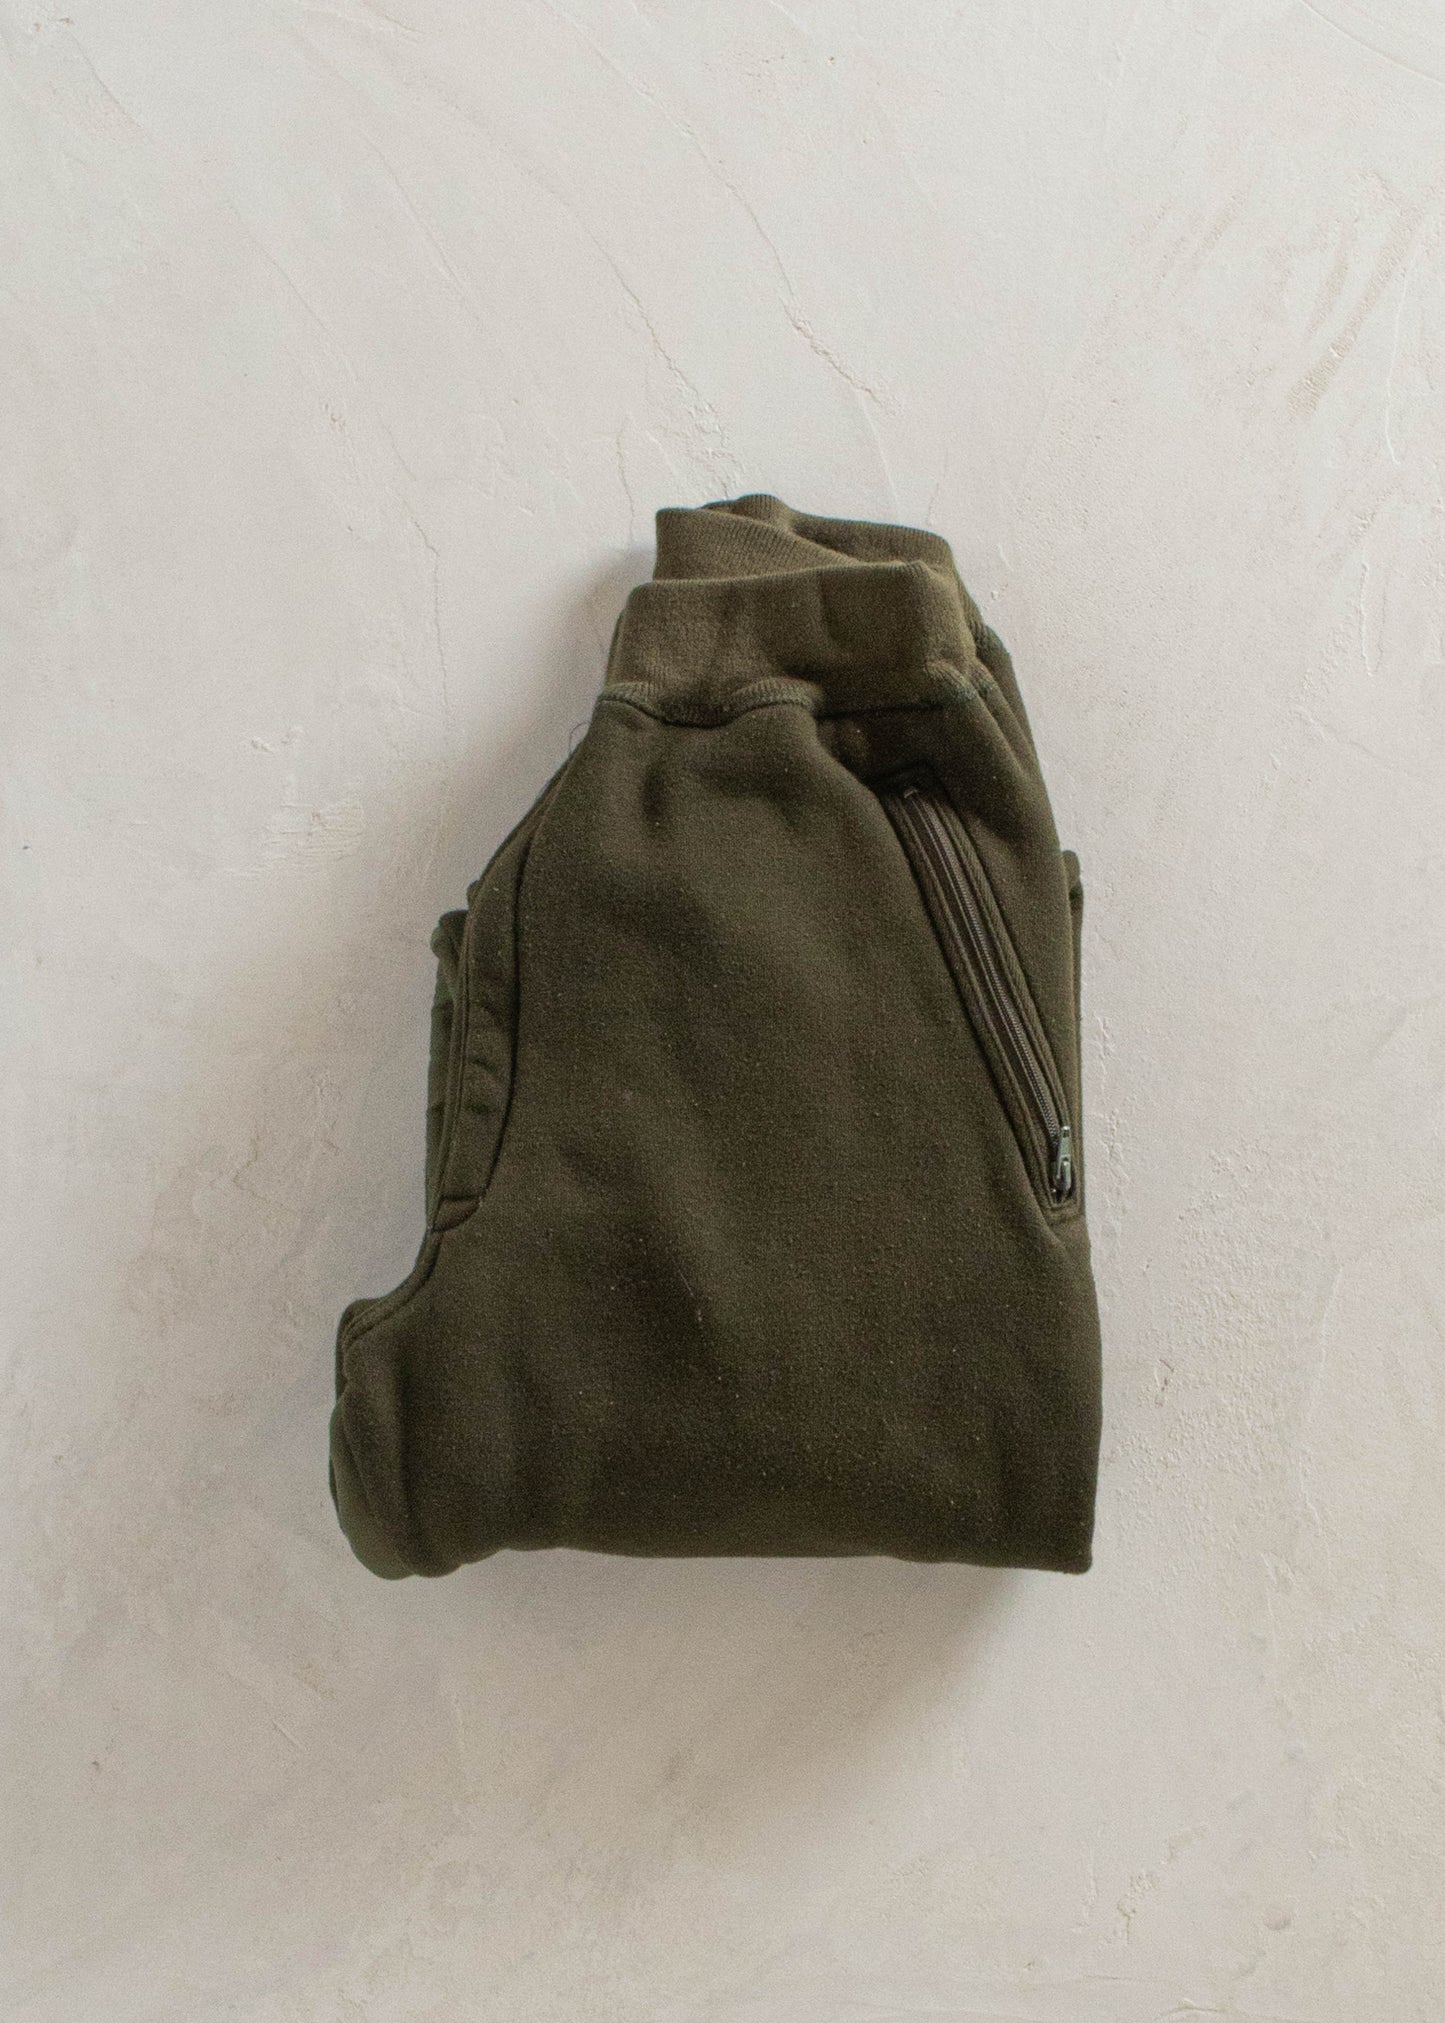 1990s Military Combat Sweatpants Size Women's 27 Men's 30